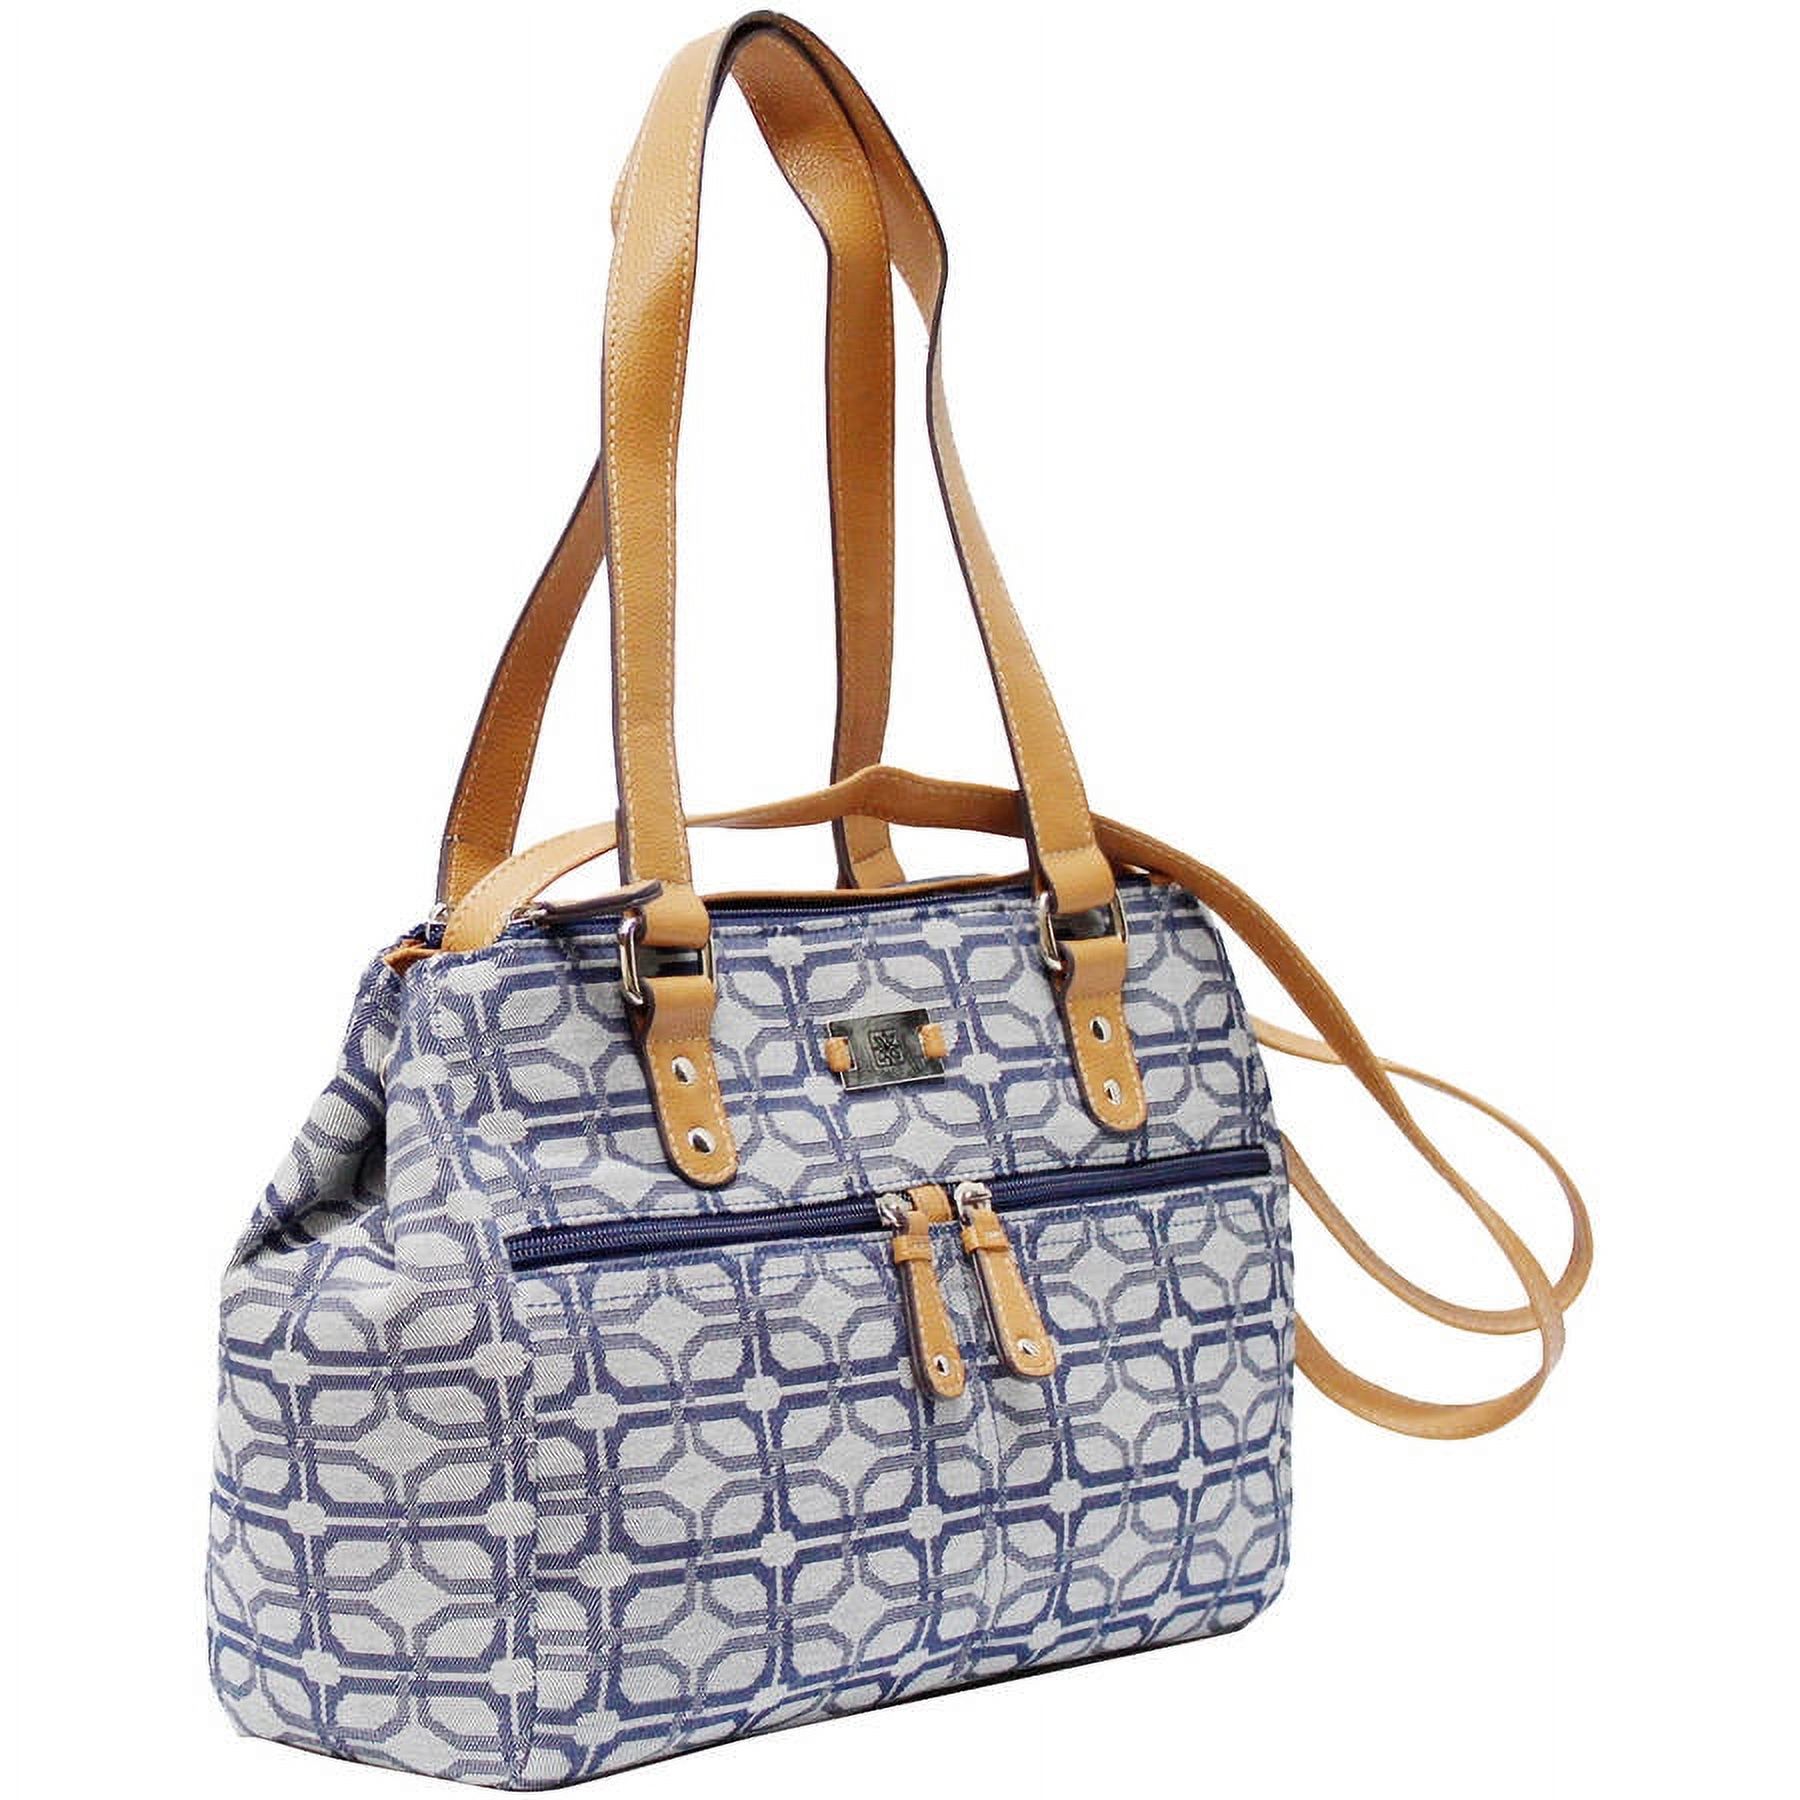 Women's Jacquard Satchel Handbag - image 2 of 3